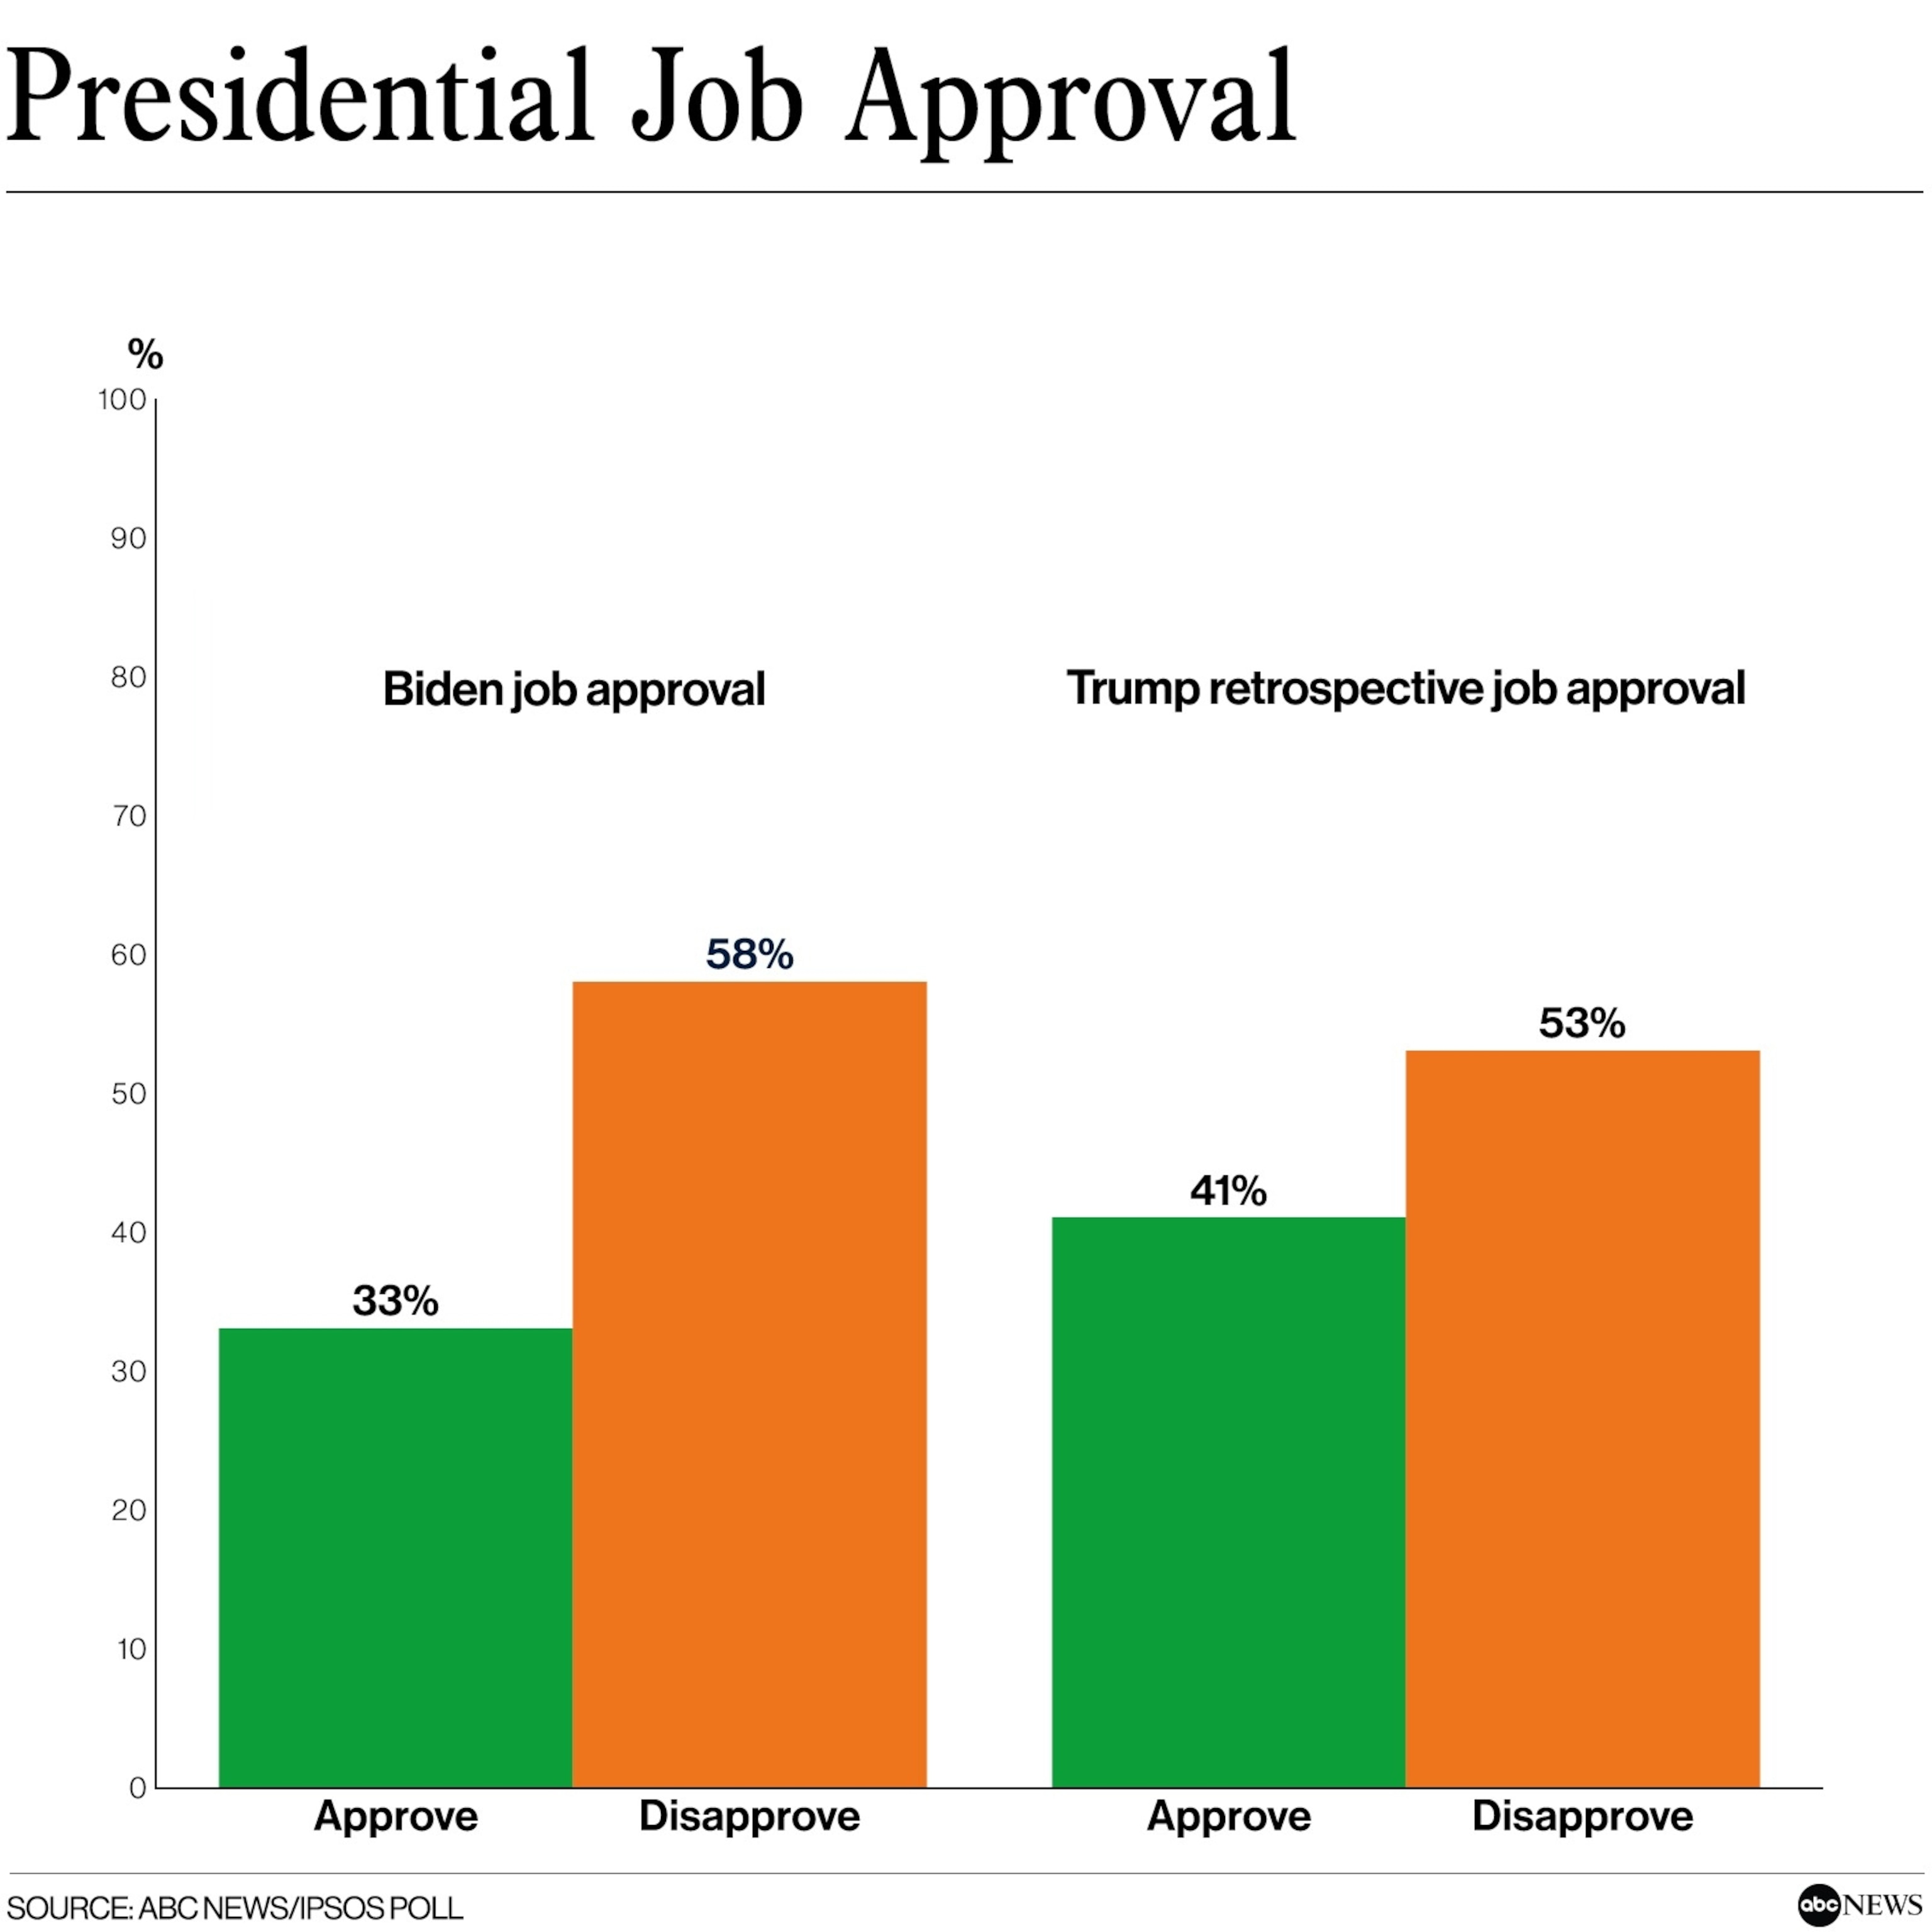 PHOTO: Presidential Job Approval